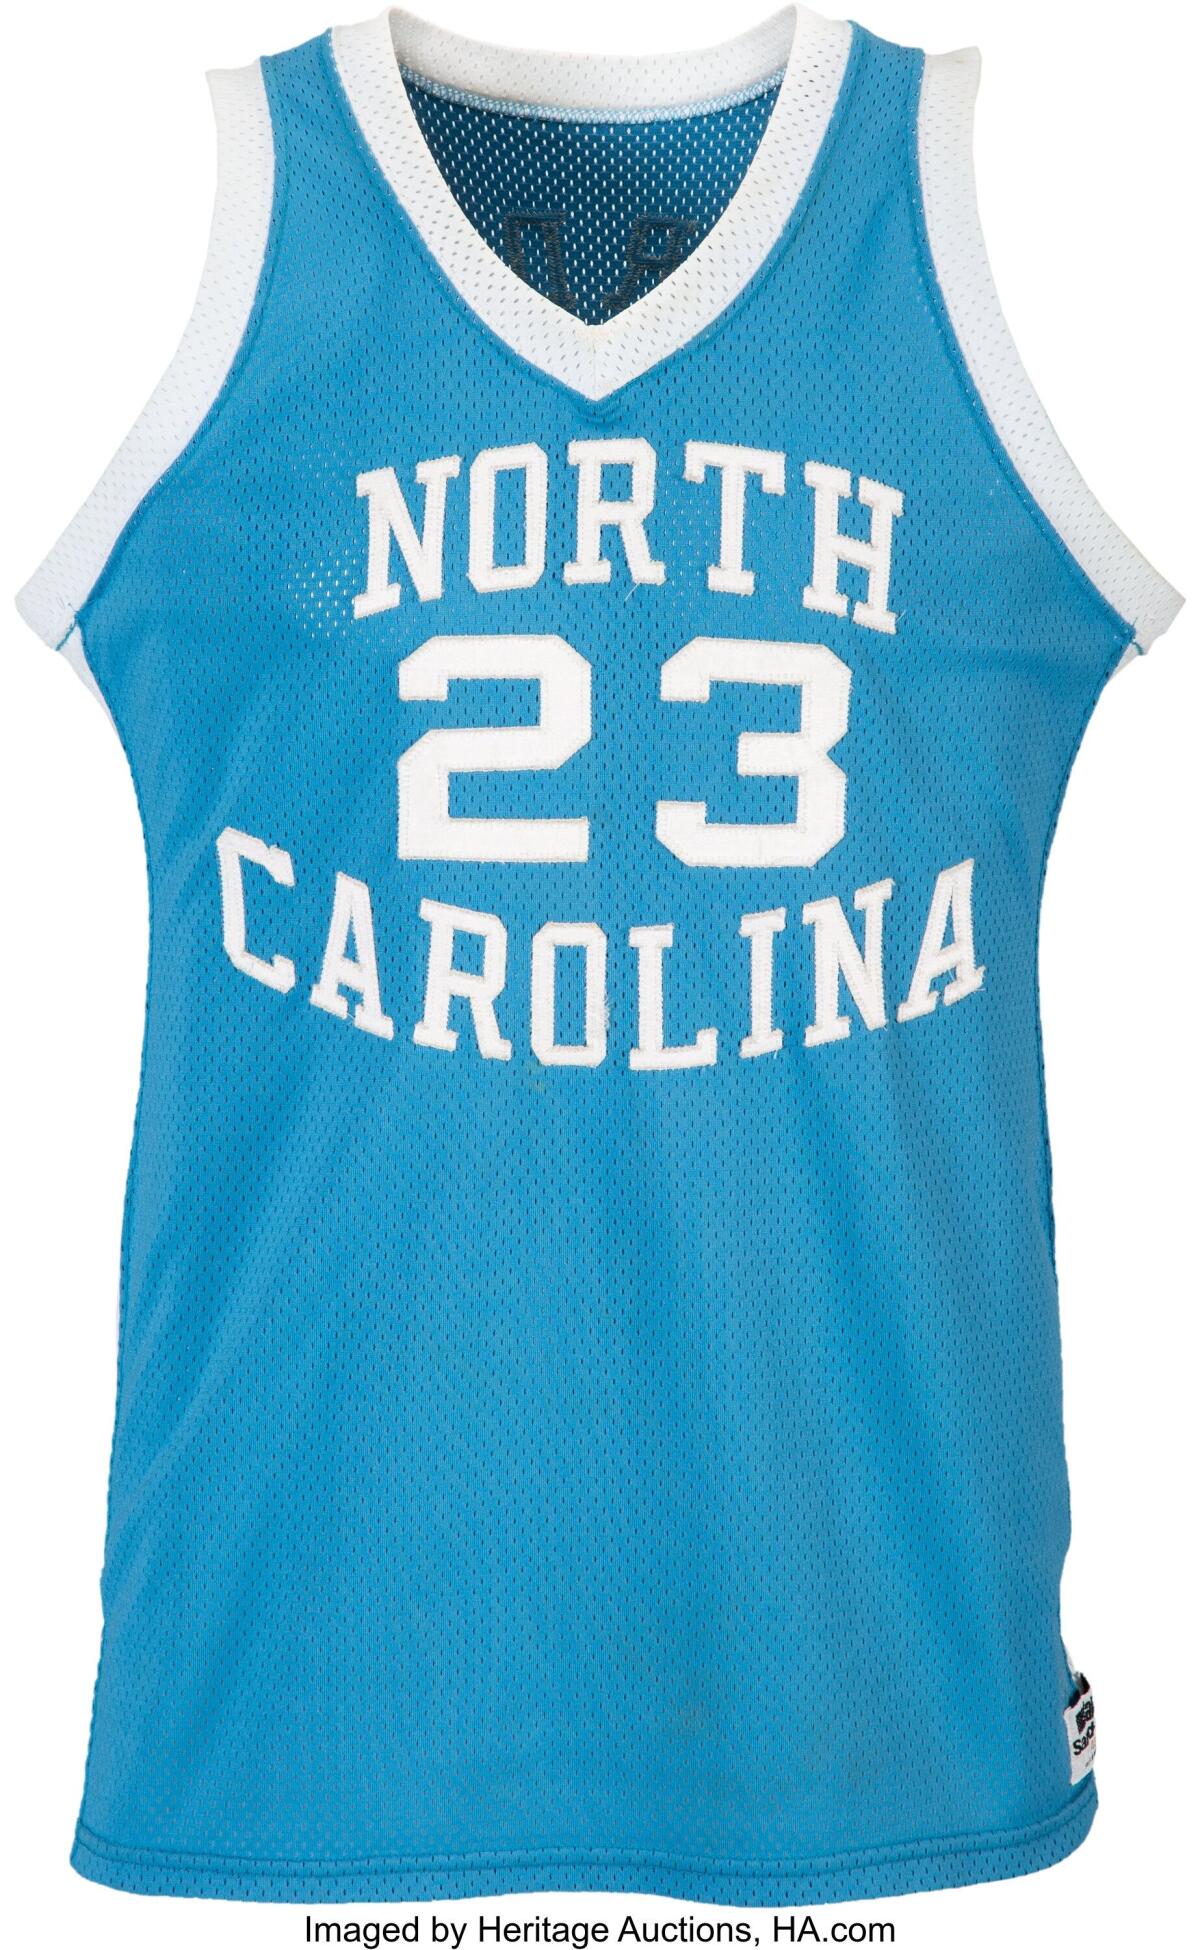 A game-worn Michael Jordan North Carolina jersey sold for $1.38 million